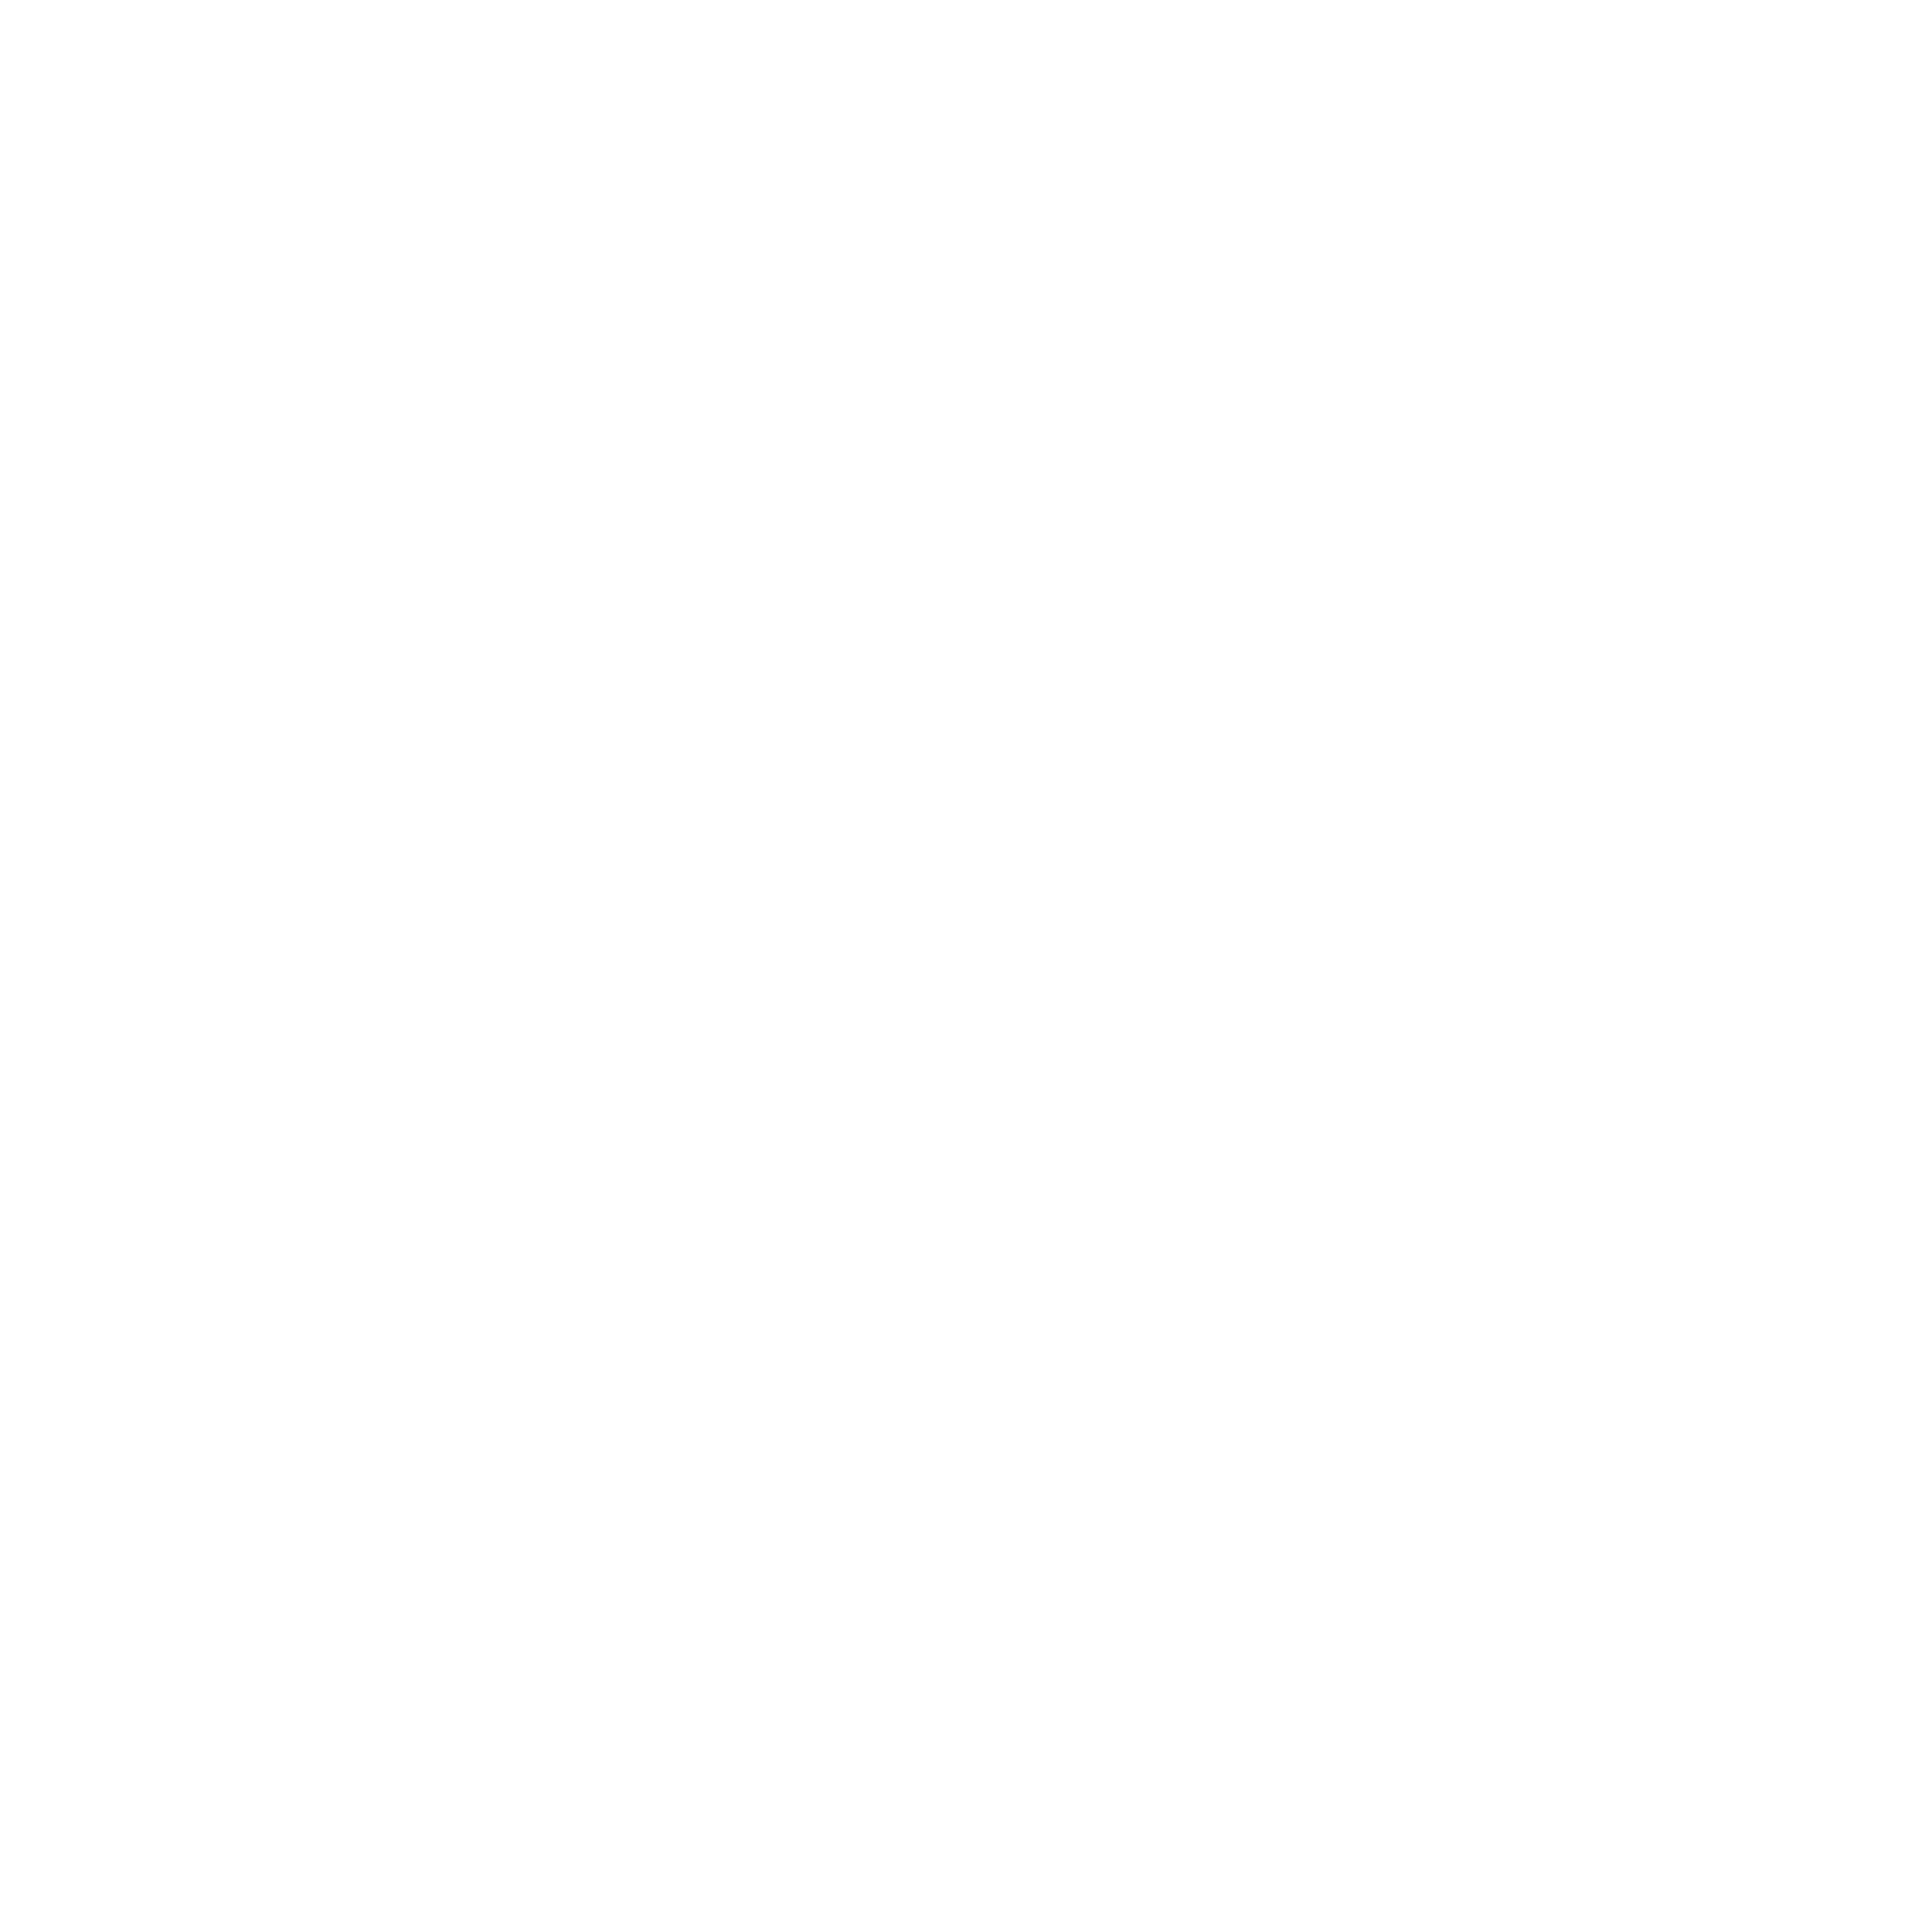 HousingOpportunity_FDIC_logos_white-01